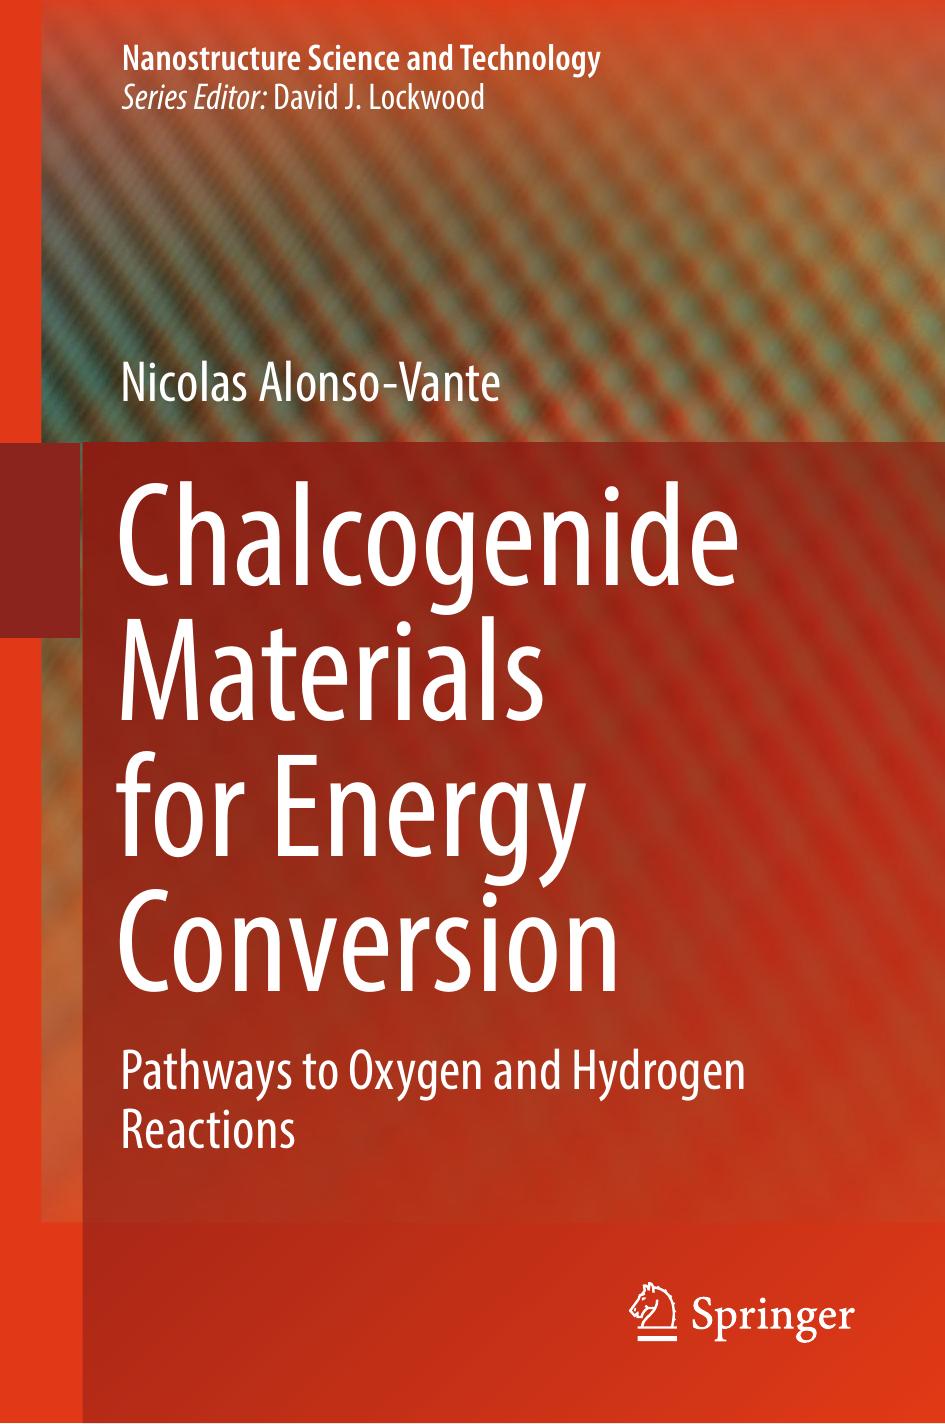 Chalcogenide Materials for Energy Conversion by Nicolas Alonso-Vante